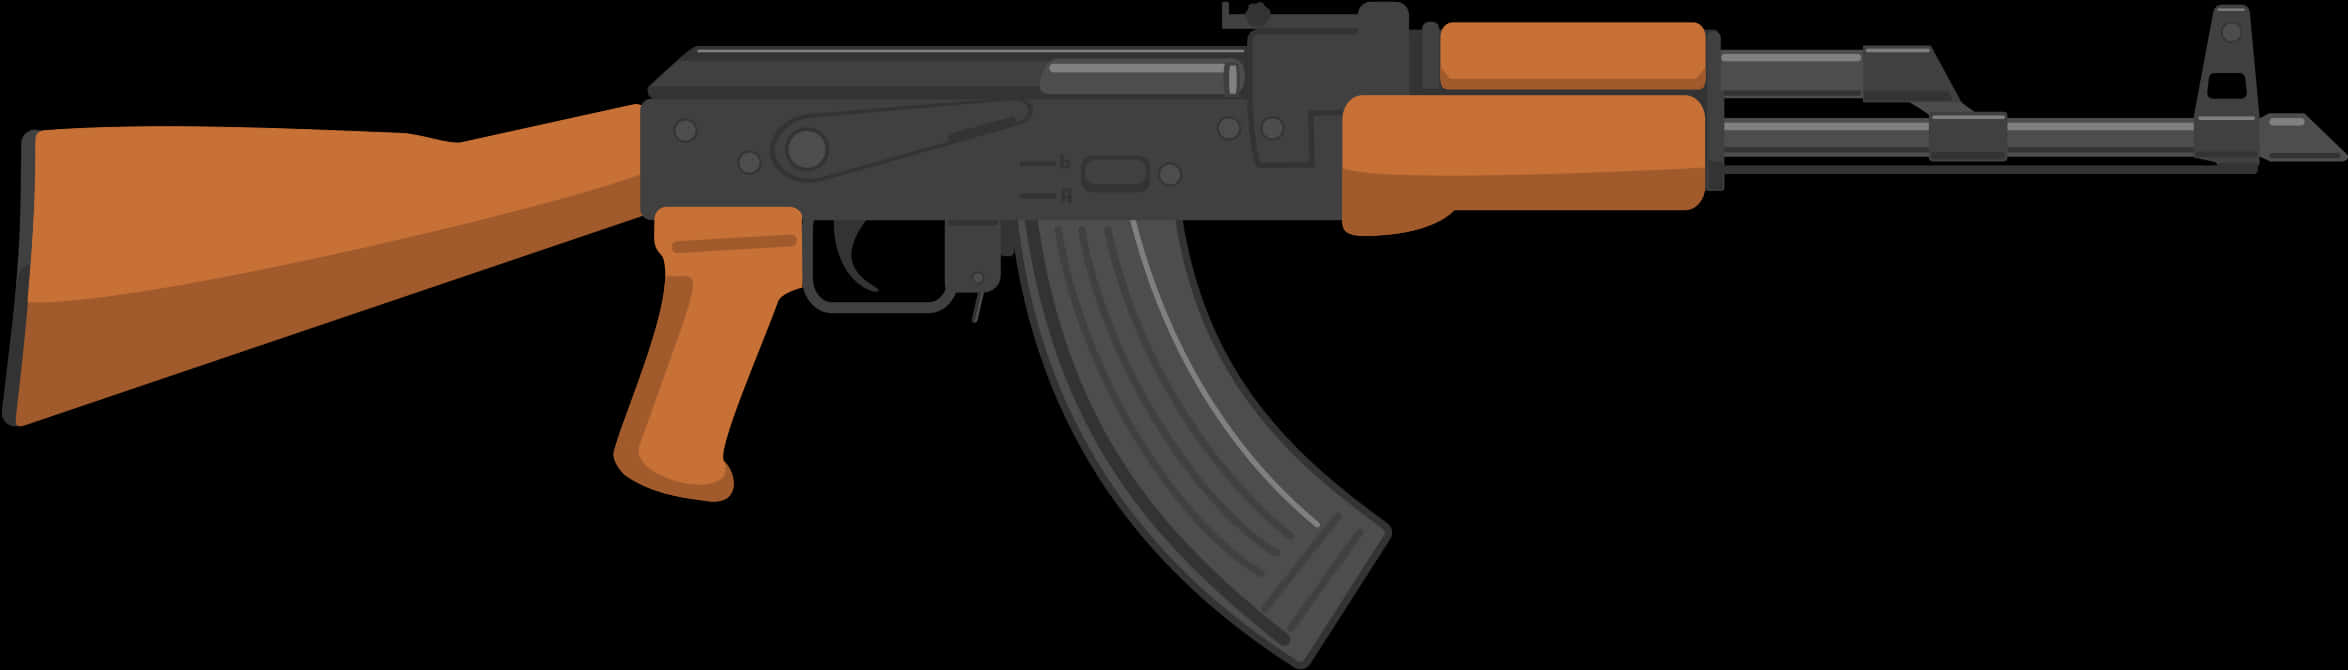 A Black And Orange Assault Rifle